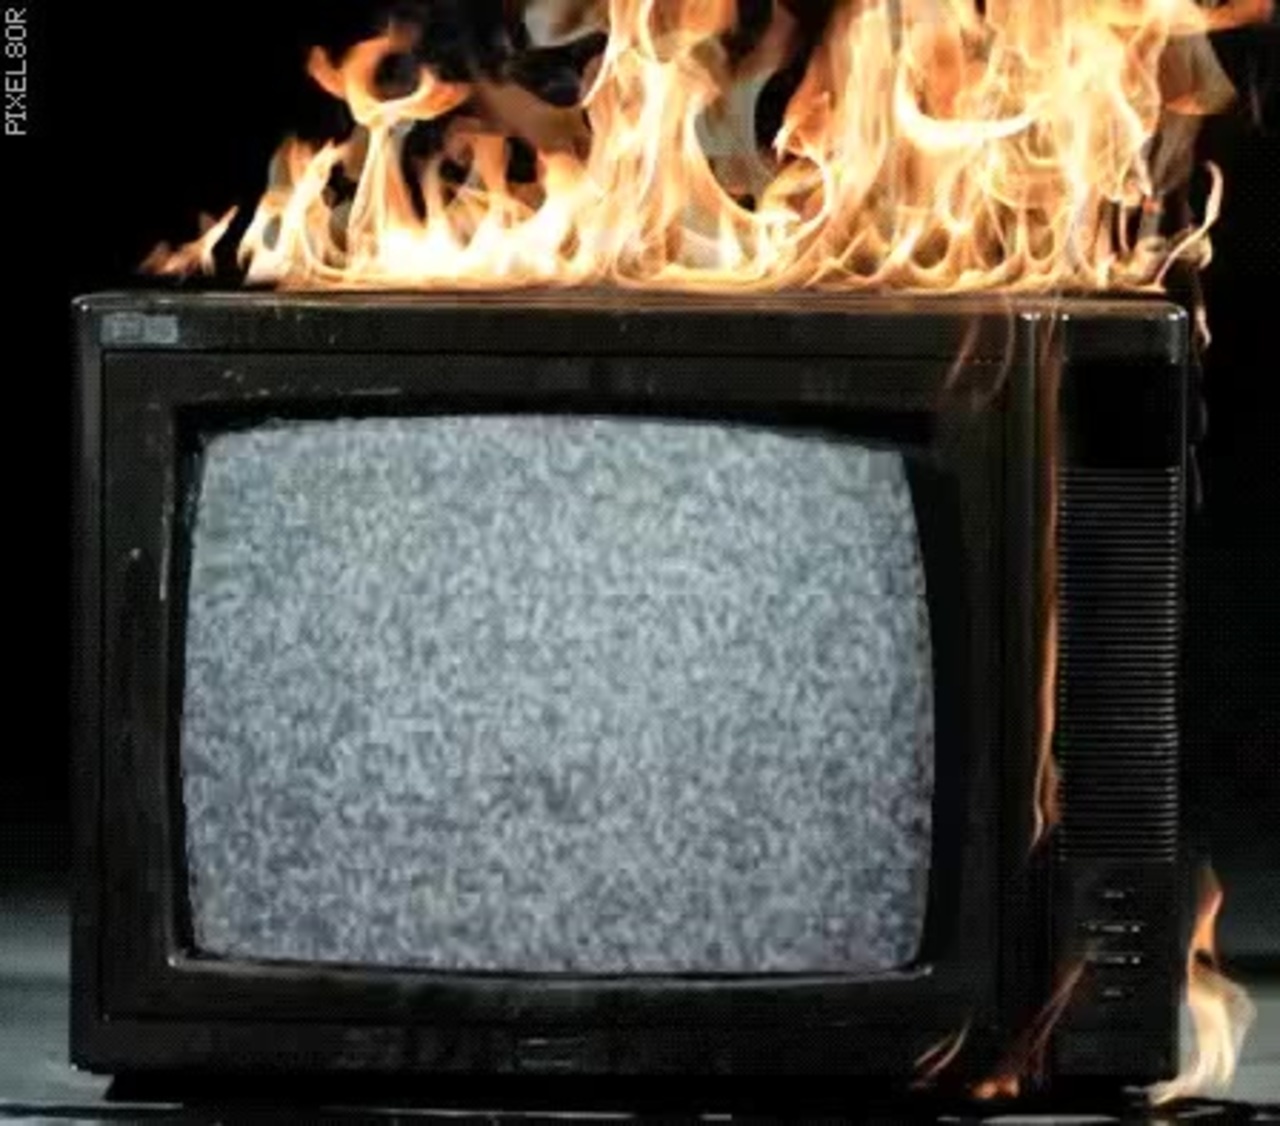 Загорелся телевизор причина. Горящий телевизор. Старый телевизор. Возгорание телевизора. Старый телевизор в огне.